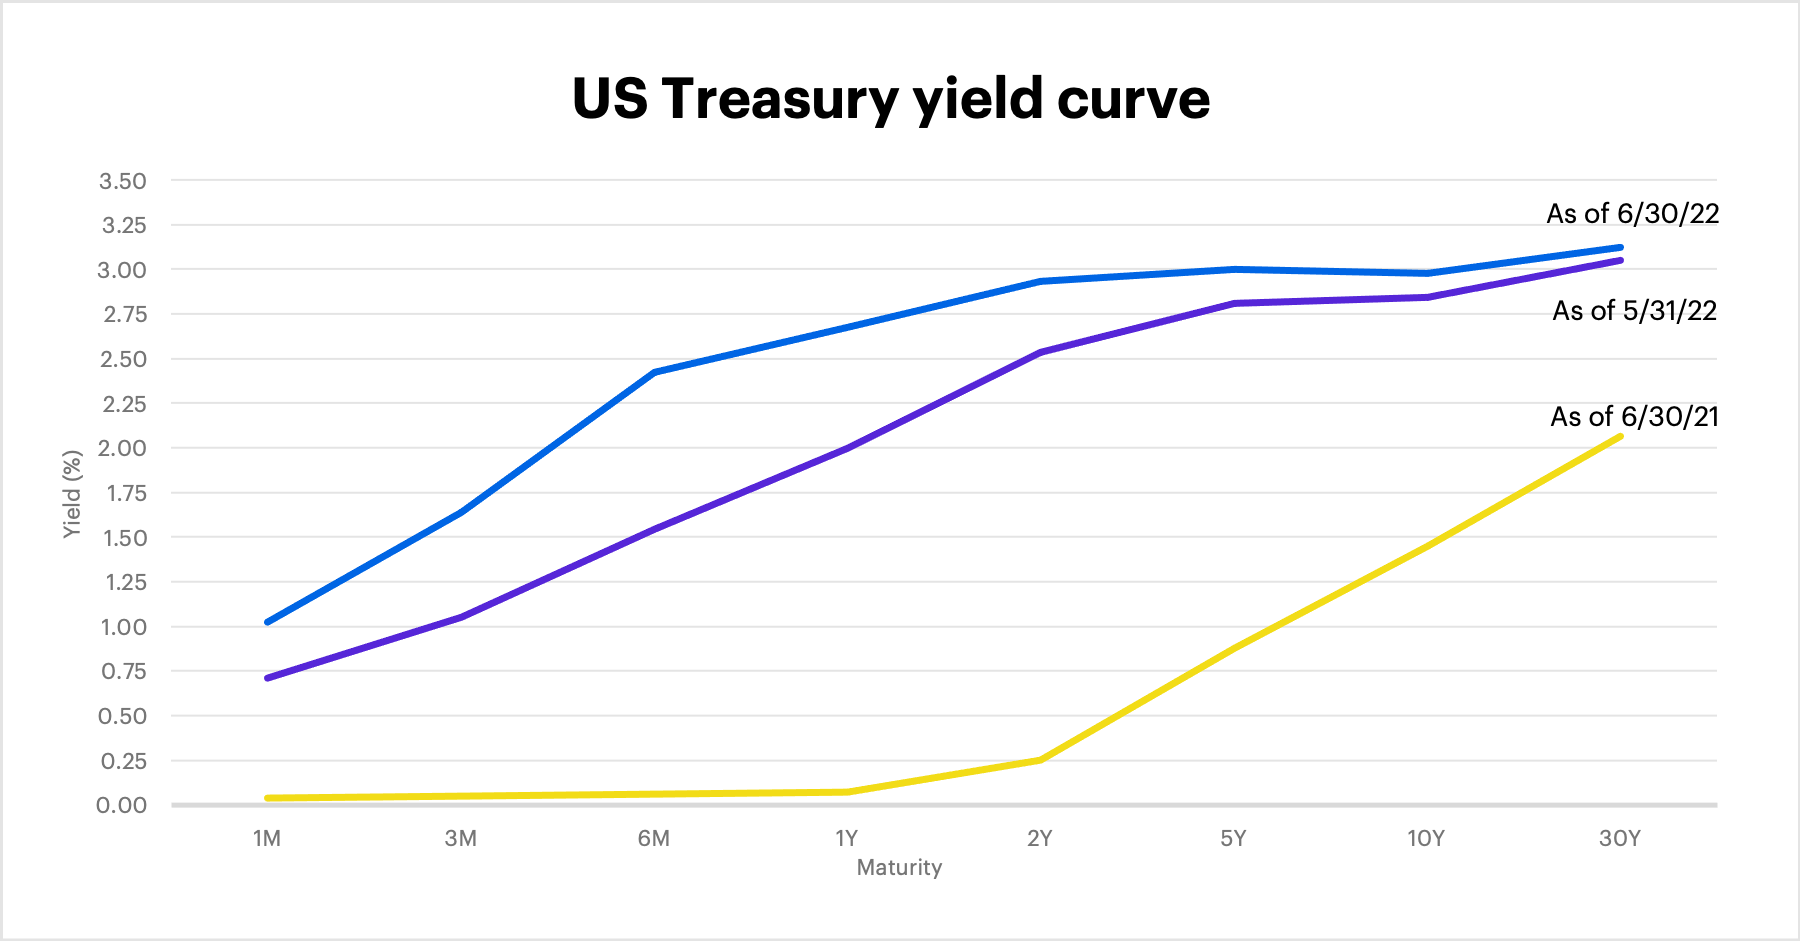 US Treasury yield curve as of June 30, 2022